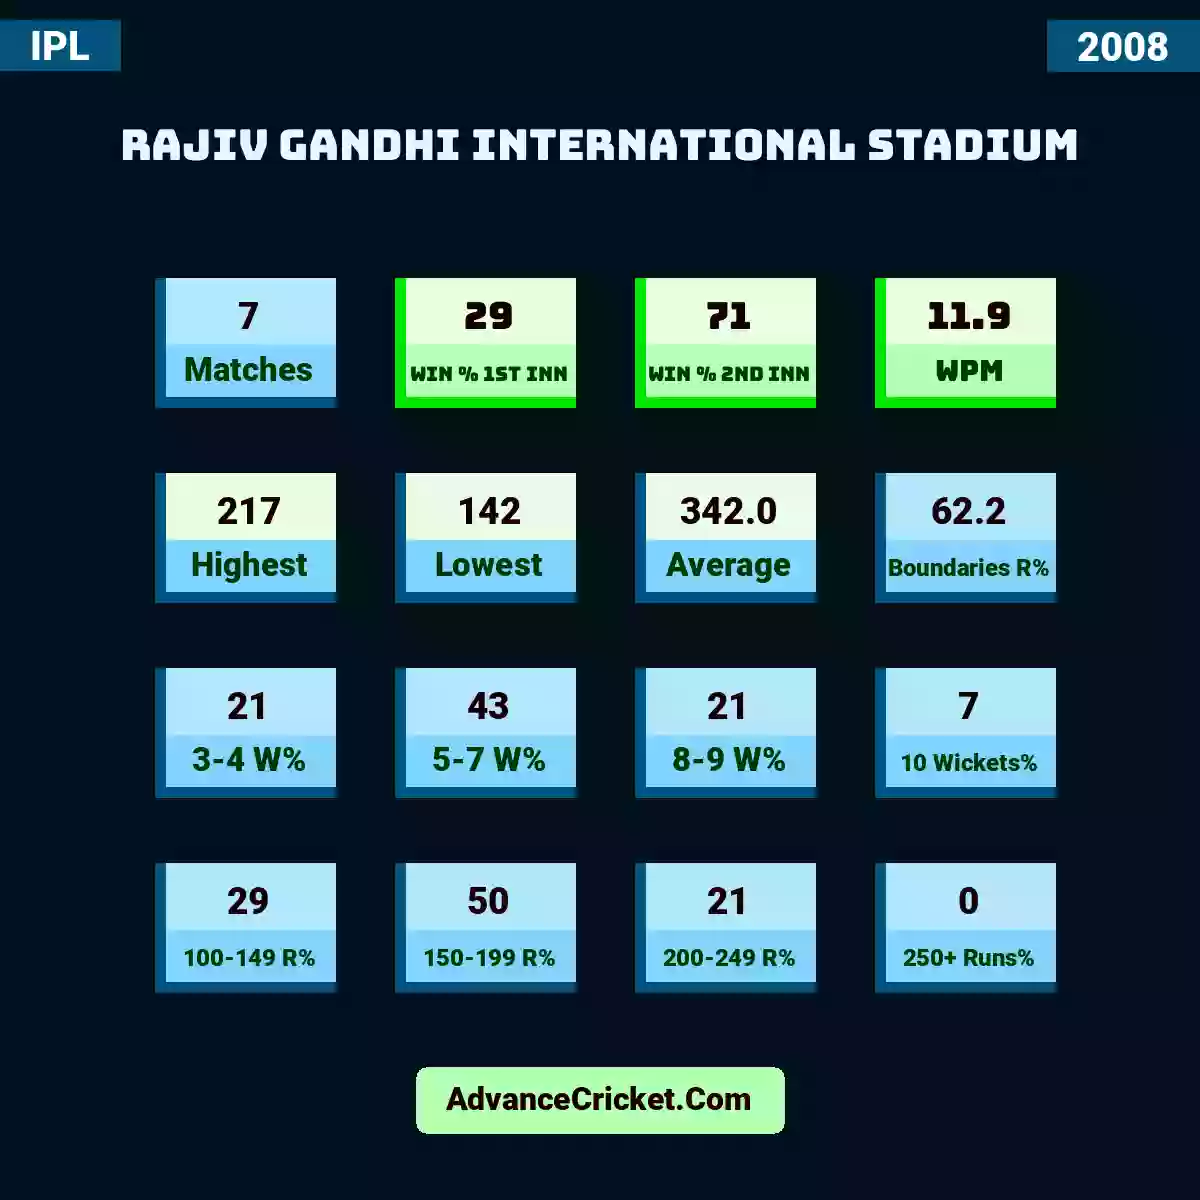 Image showing Rajiv Gandhi International Stadium with Matches: 7, Win % 1st Inn: 29, Win % 2nd Inn: 71, WPM: 11.9, Highest: 217, Lowest: 142, Average: 342.0, Boundaries R%: 62.2, 3-4 W%: 21, 5-7 W%: 43, 8-9 W%: 21, 10 Wickets%: 7, 100-149 R%: 29, 150-199 R%: 50, 200-249 R%: 21, 250+ Runs%: 0.